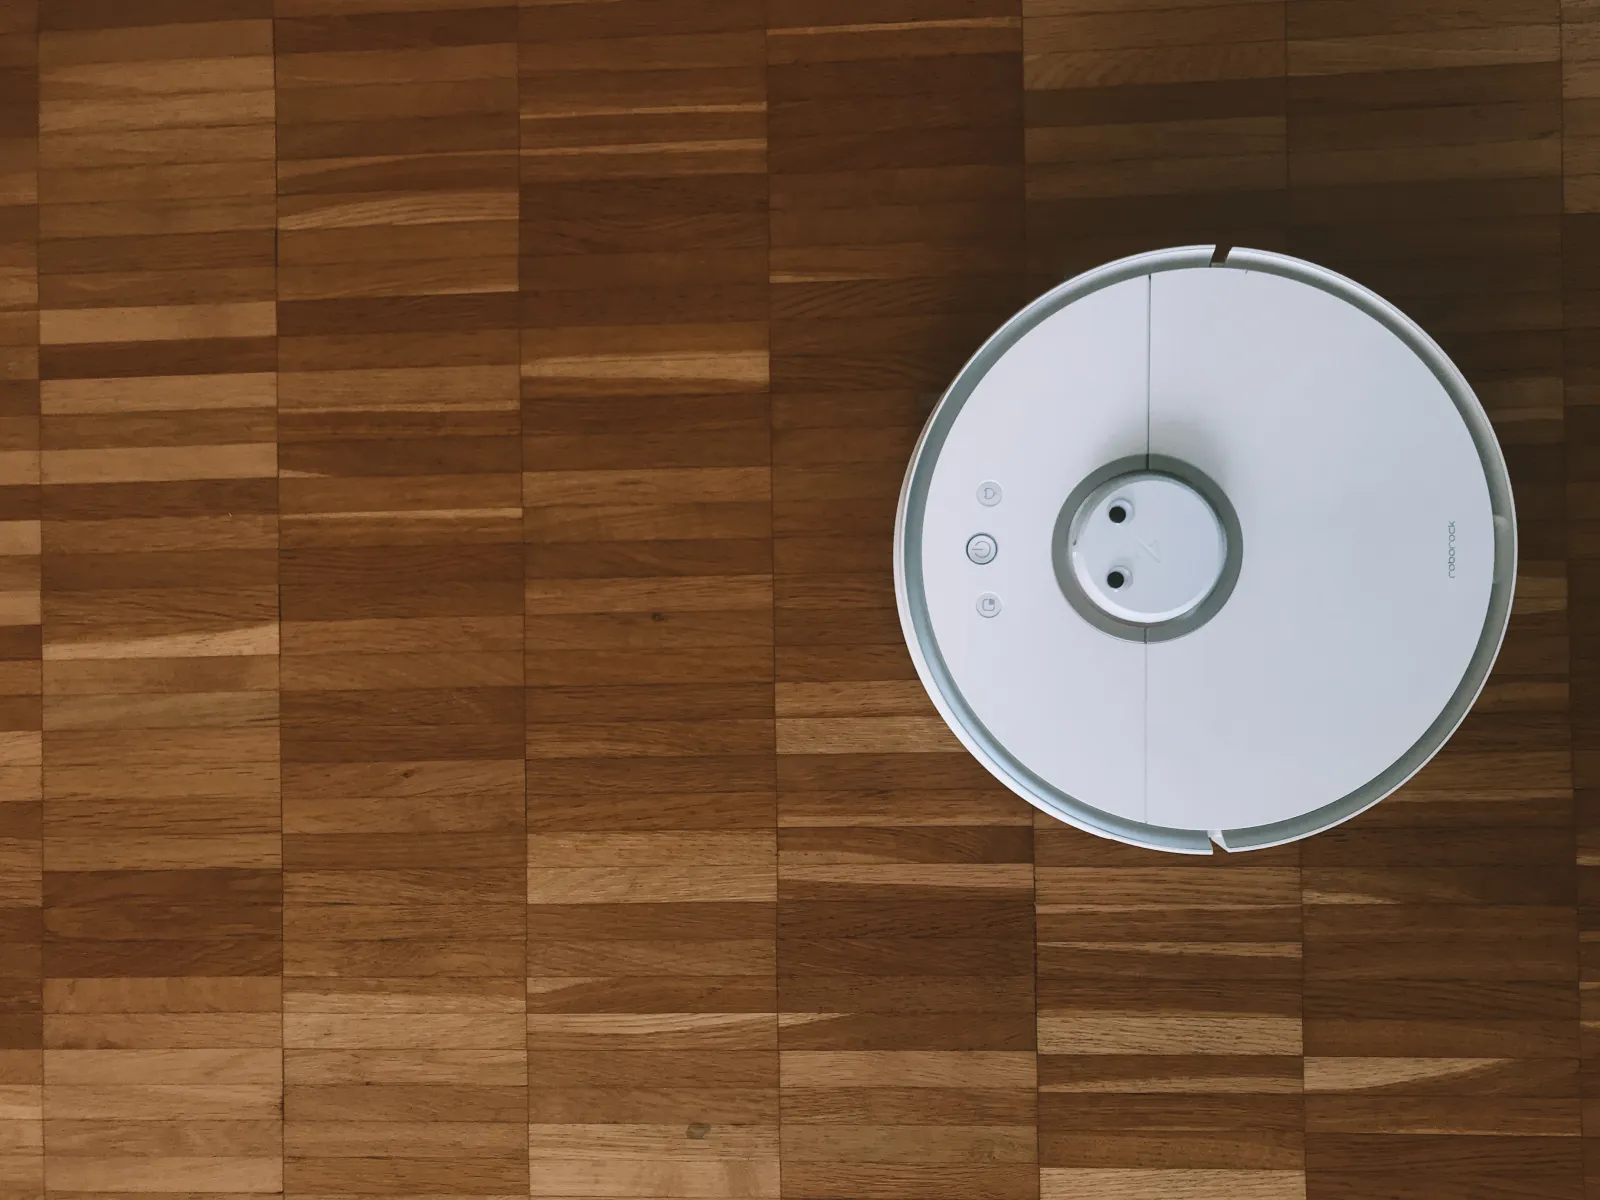 white robot vacuum cleaning hardwood floors